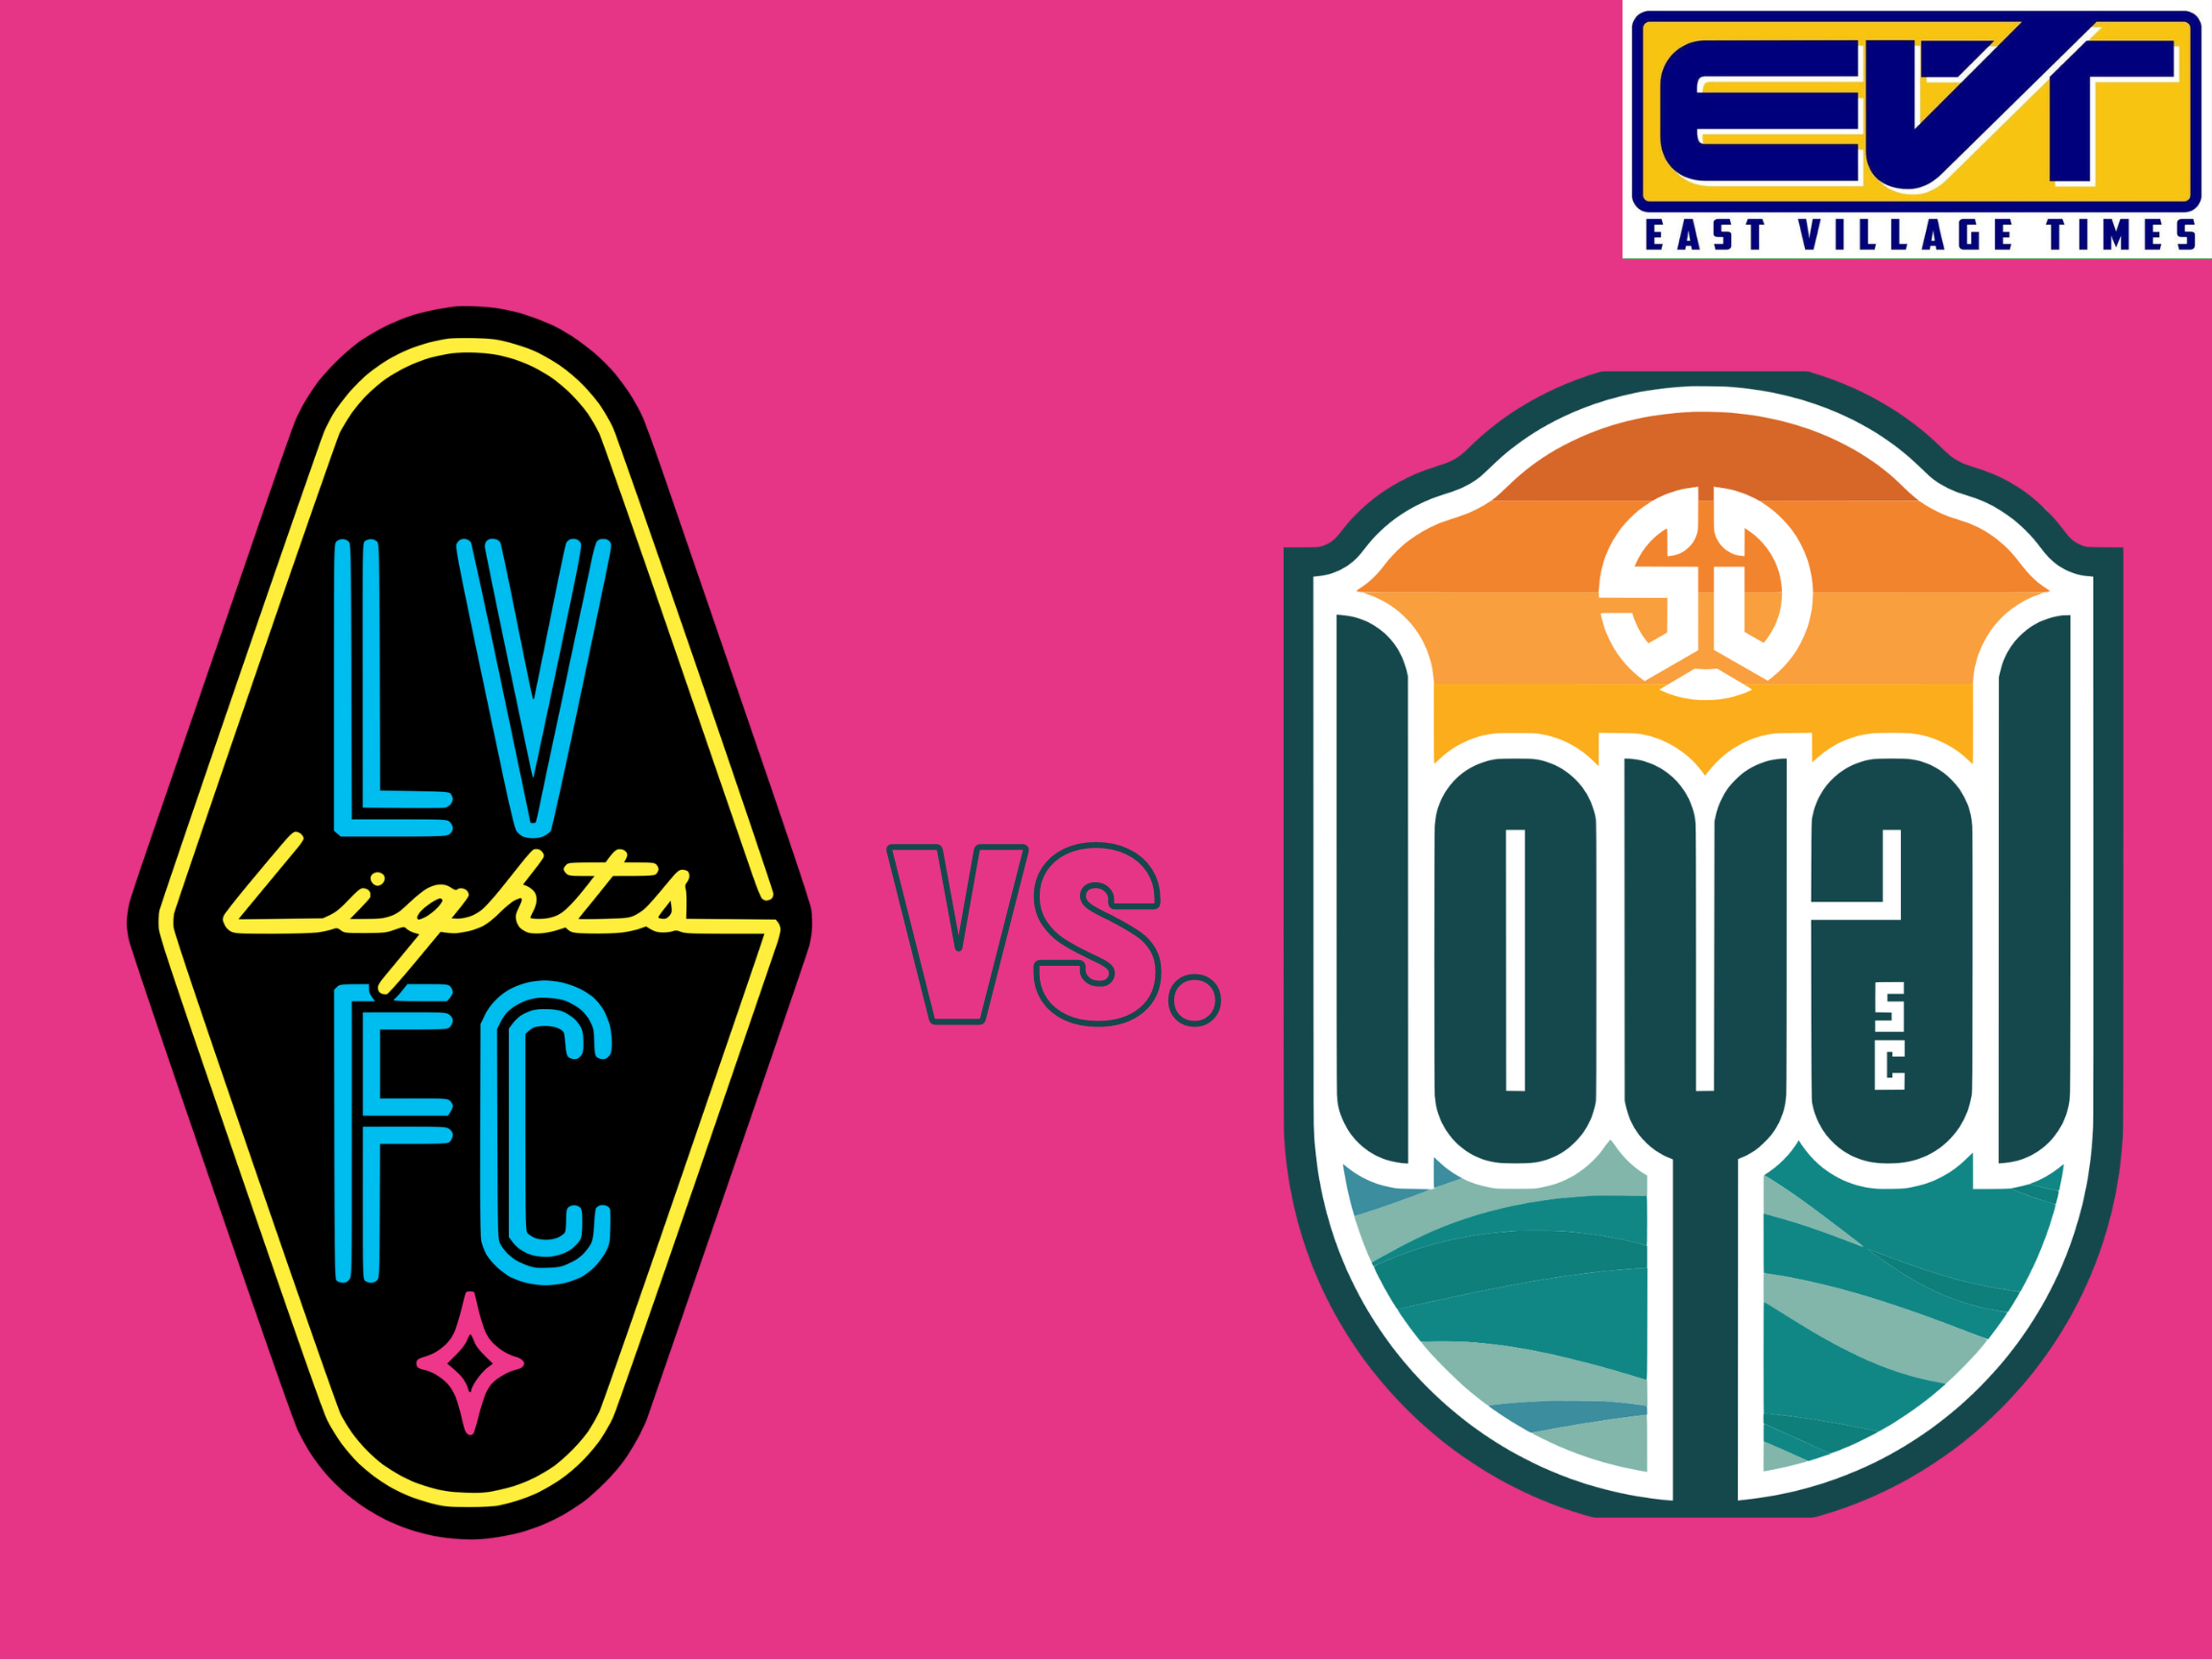 San Diego Loyal match preview against Las Vegas Lights FC